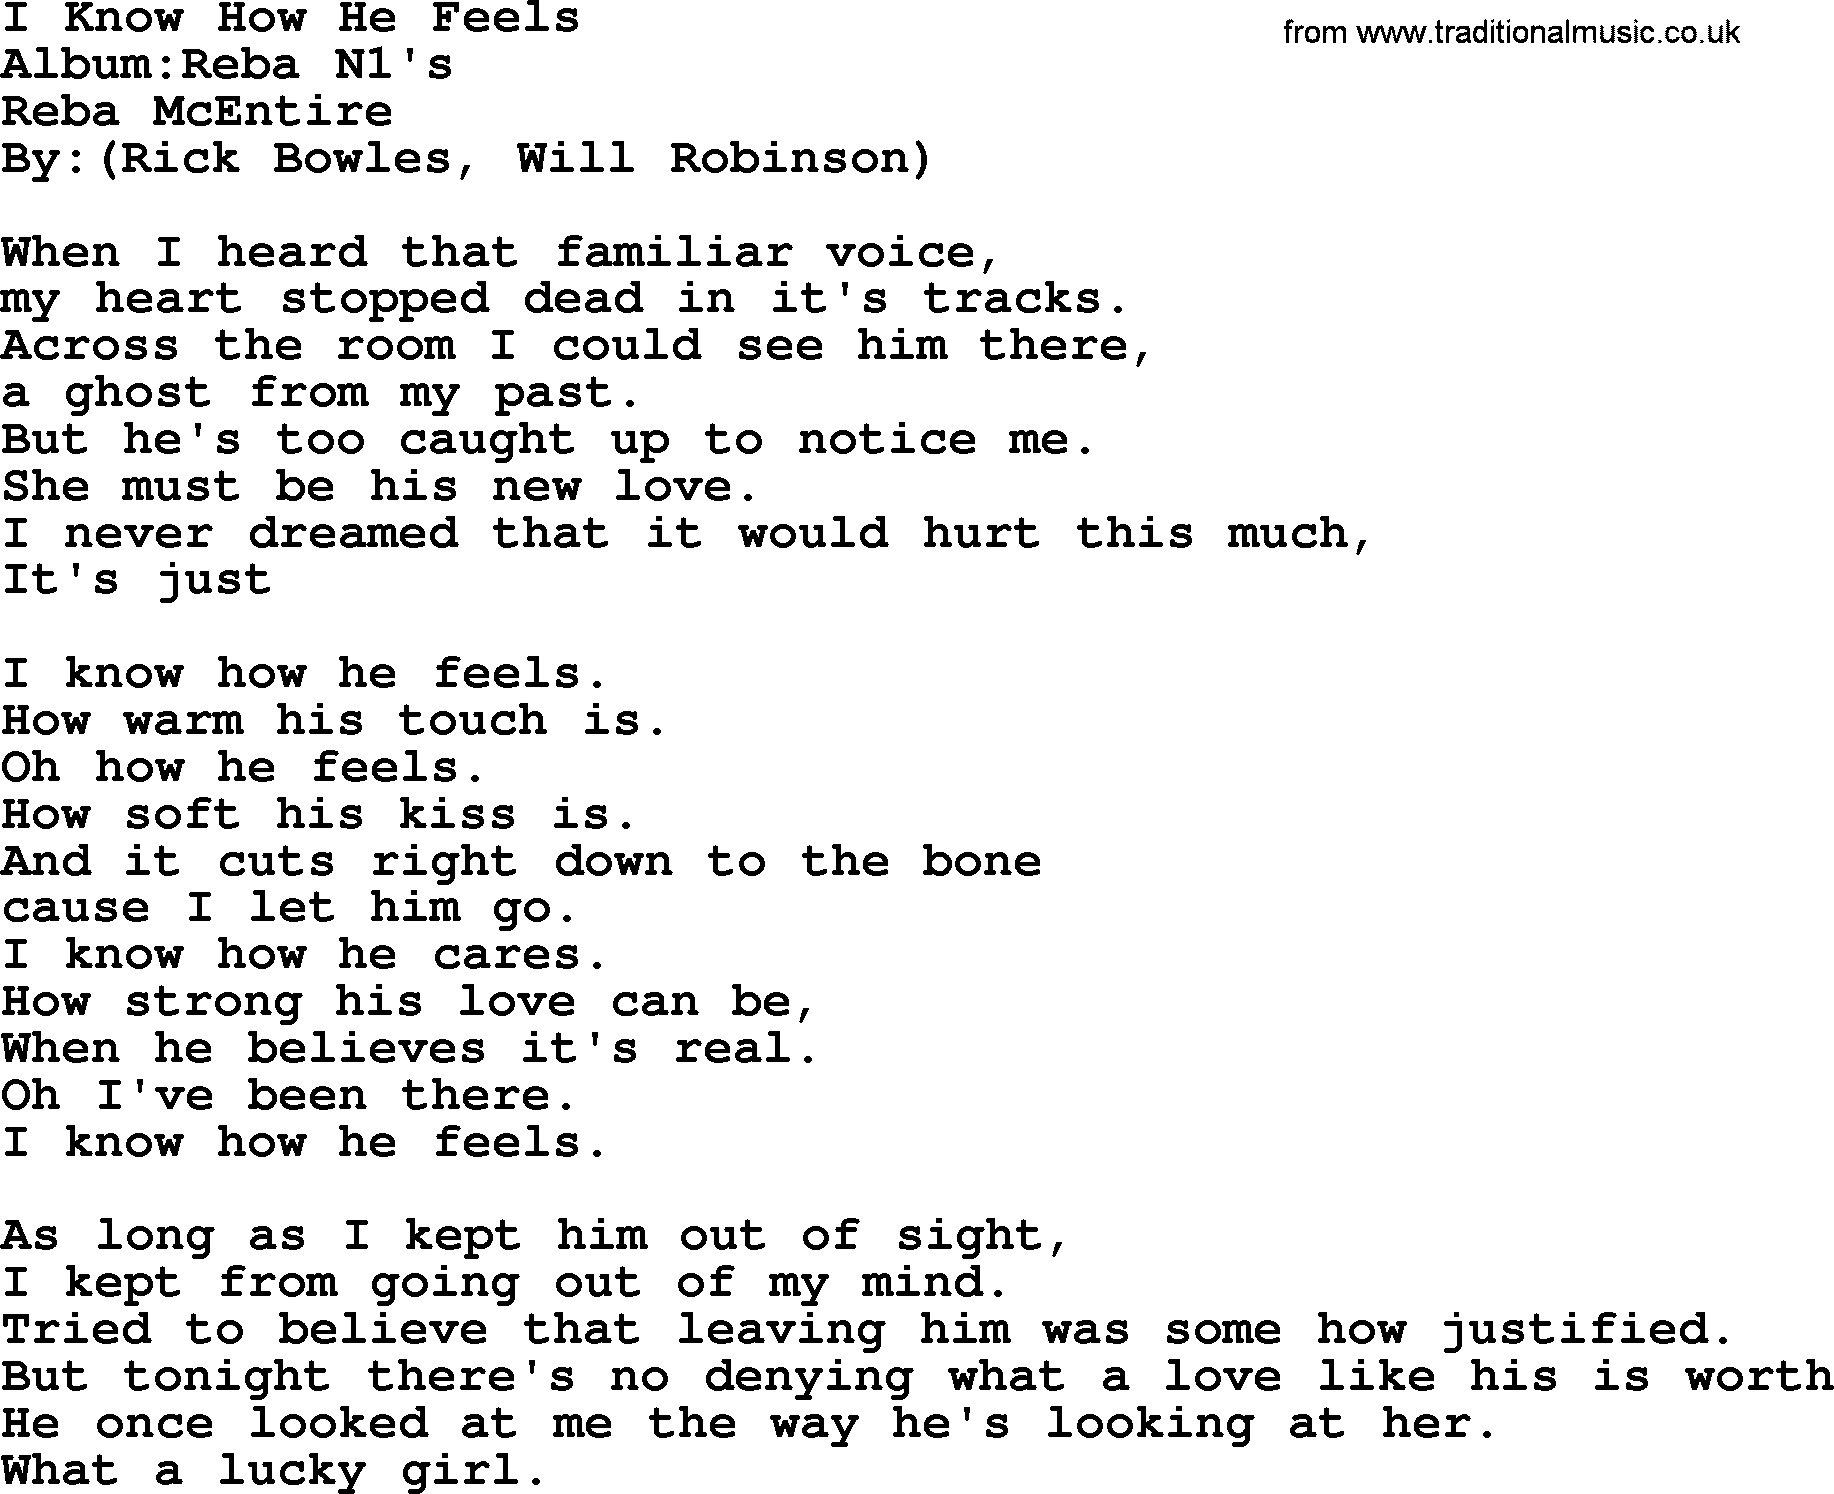 Reba McEntire song: I Know How He Feels lyrics